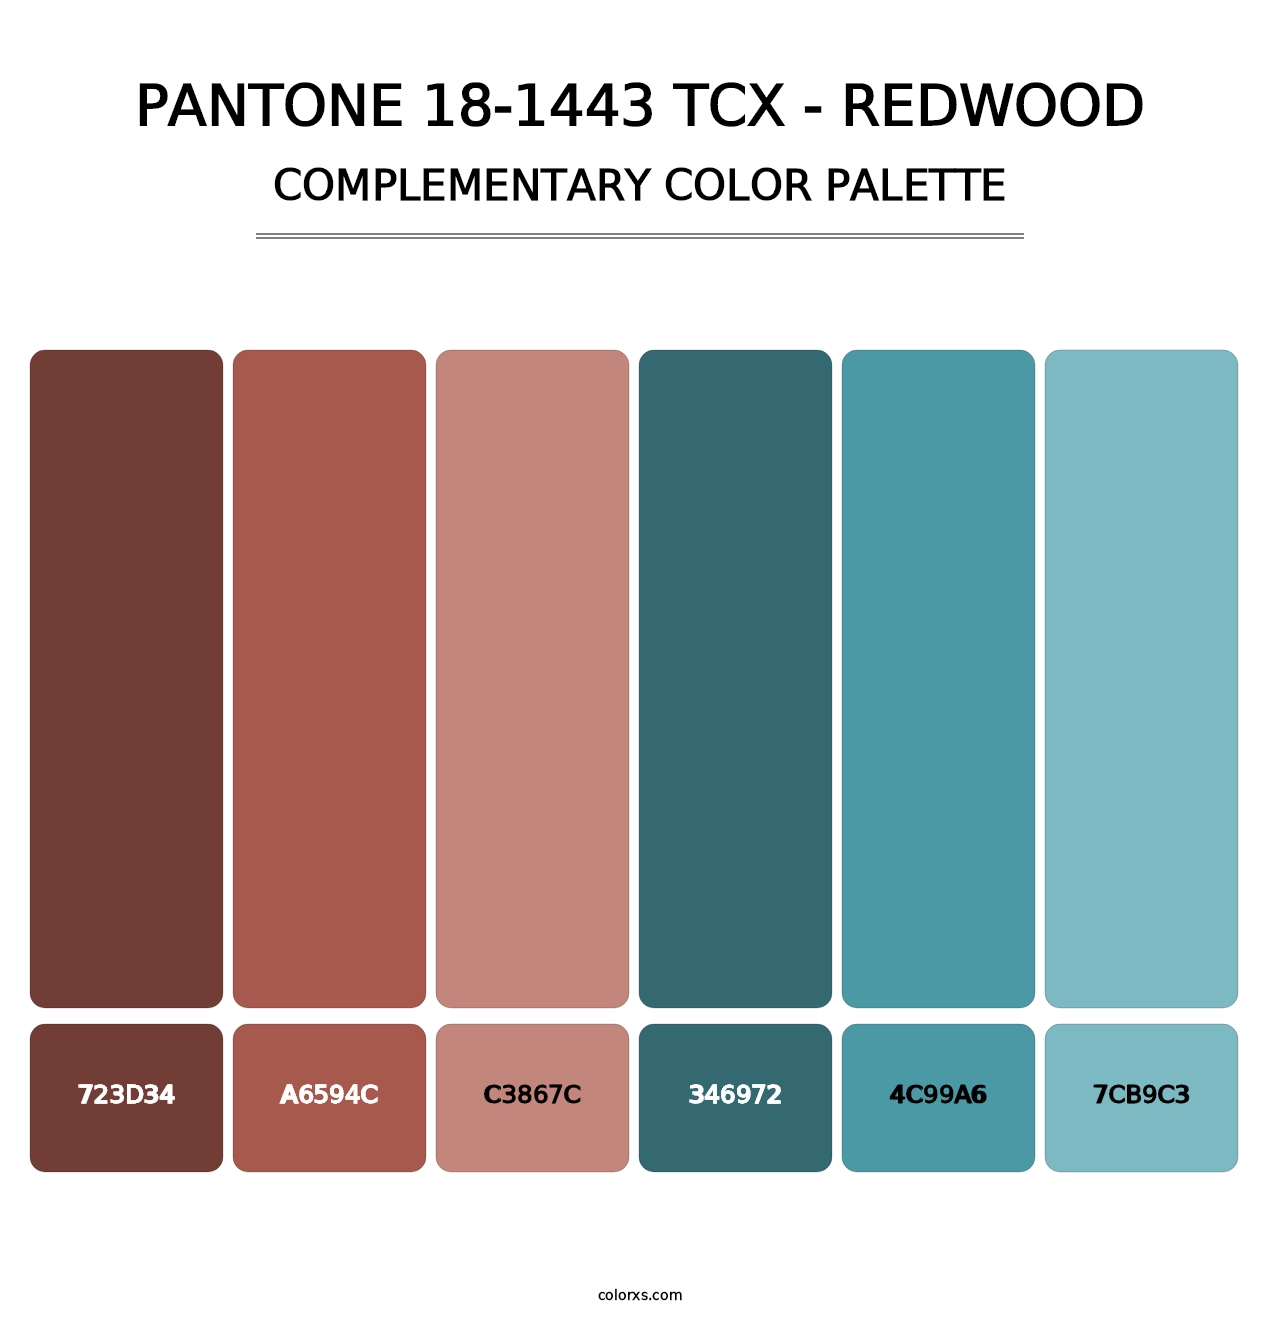 PANTONE 18-1443 TCX - Redwood - Complementary Color Palette